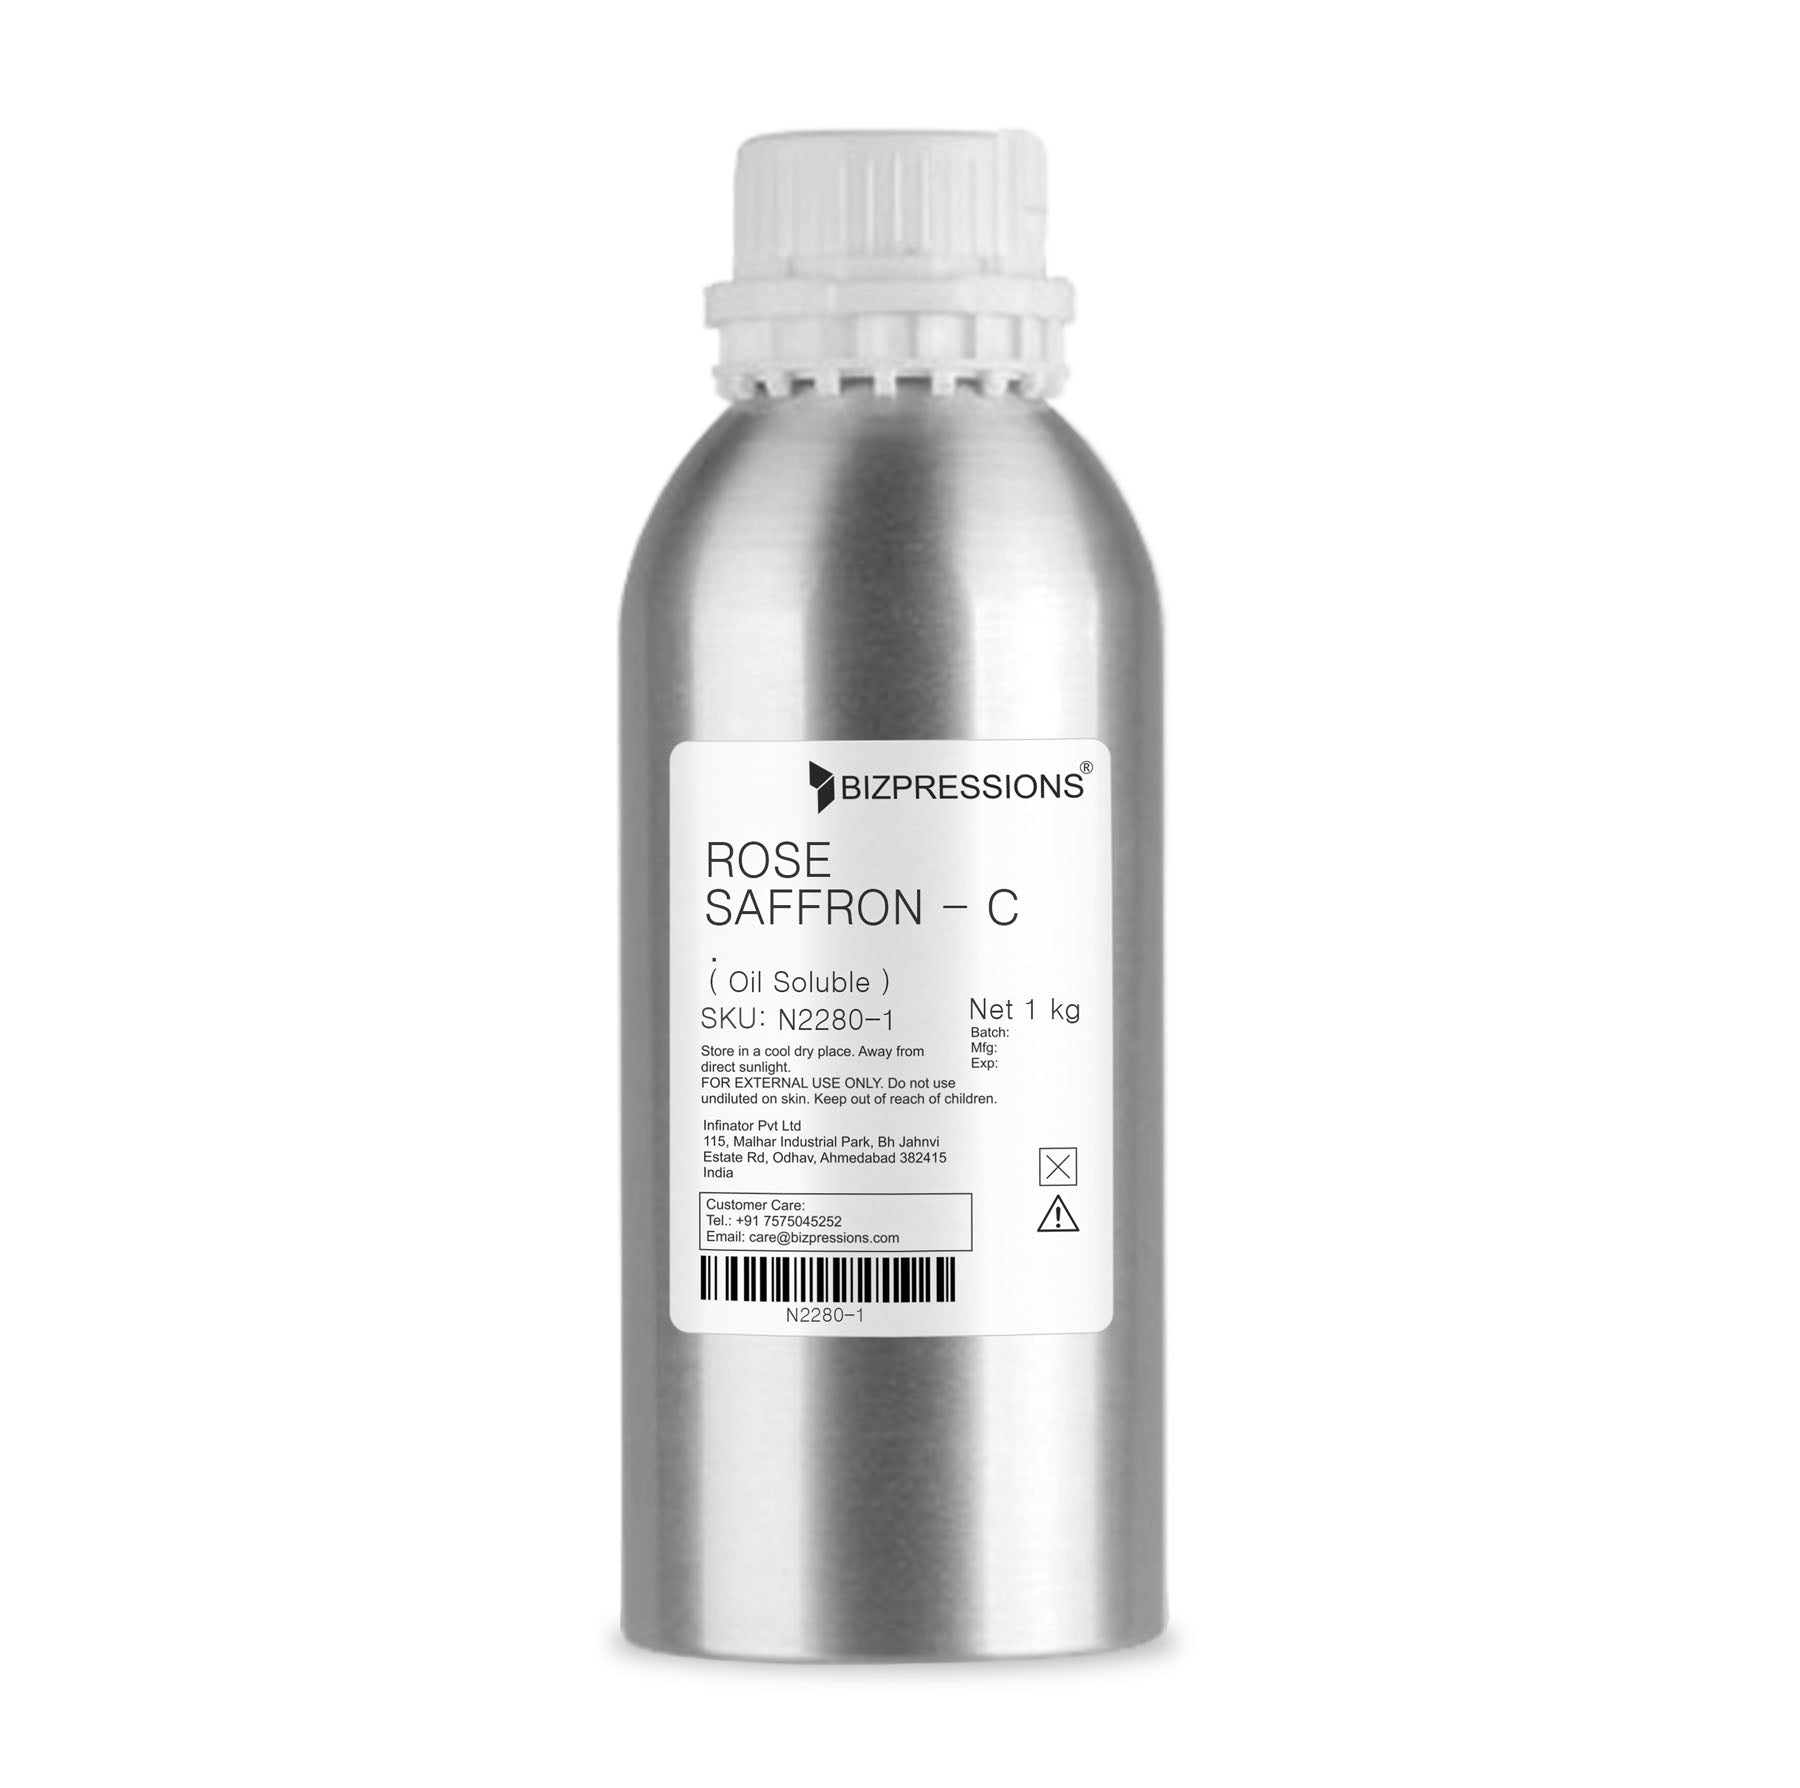 ROSE SAFFRON - C - Fragrance ( Oil Soluble ) - 1 kg